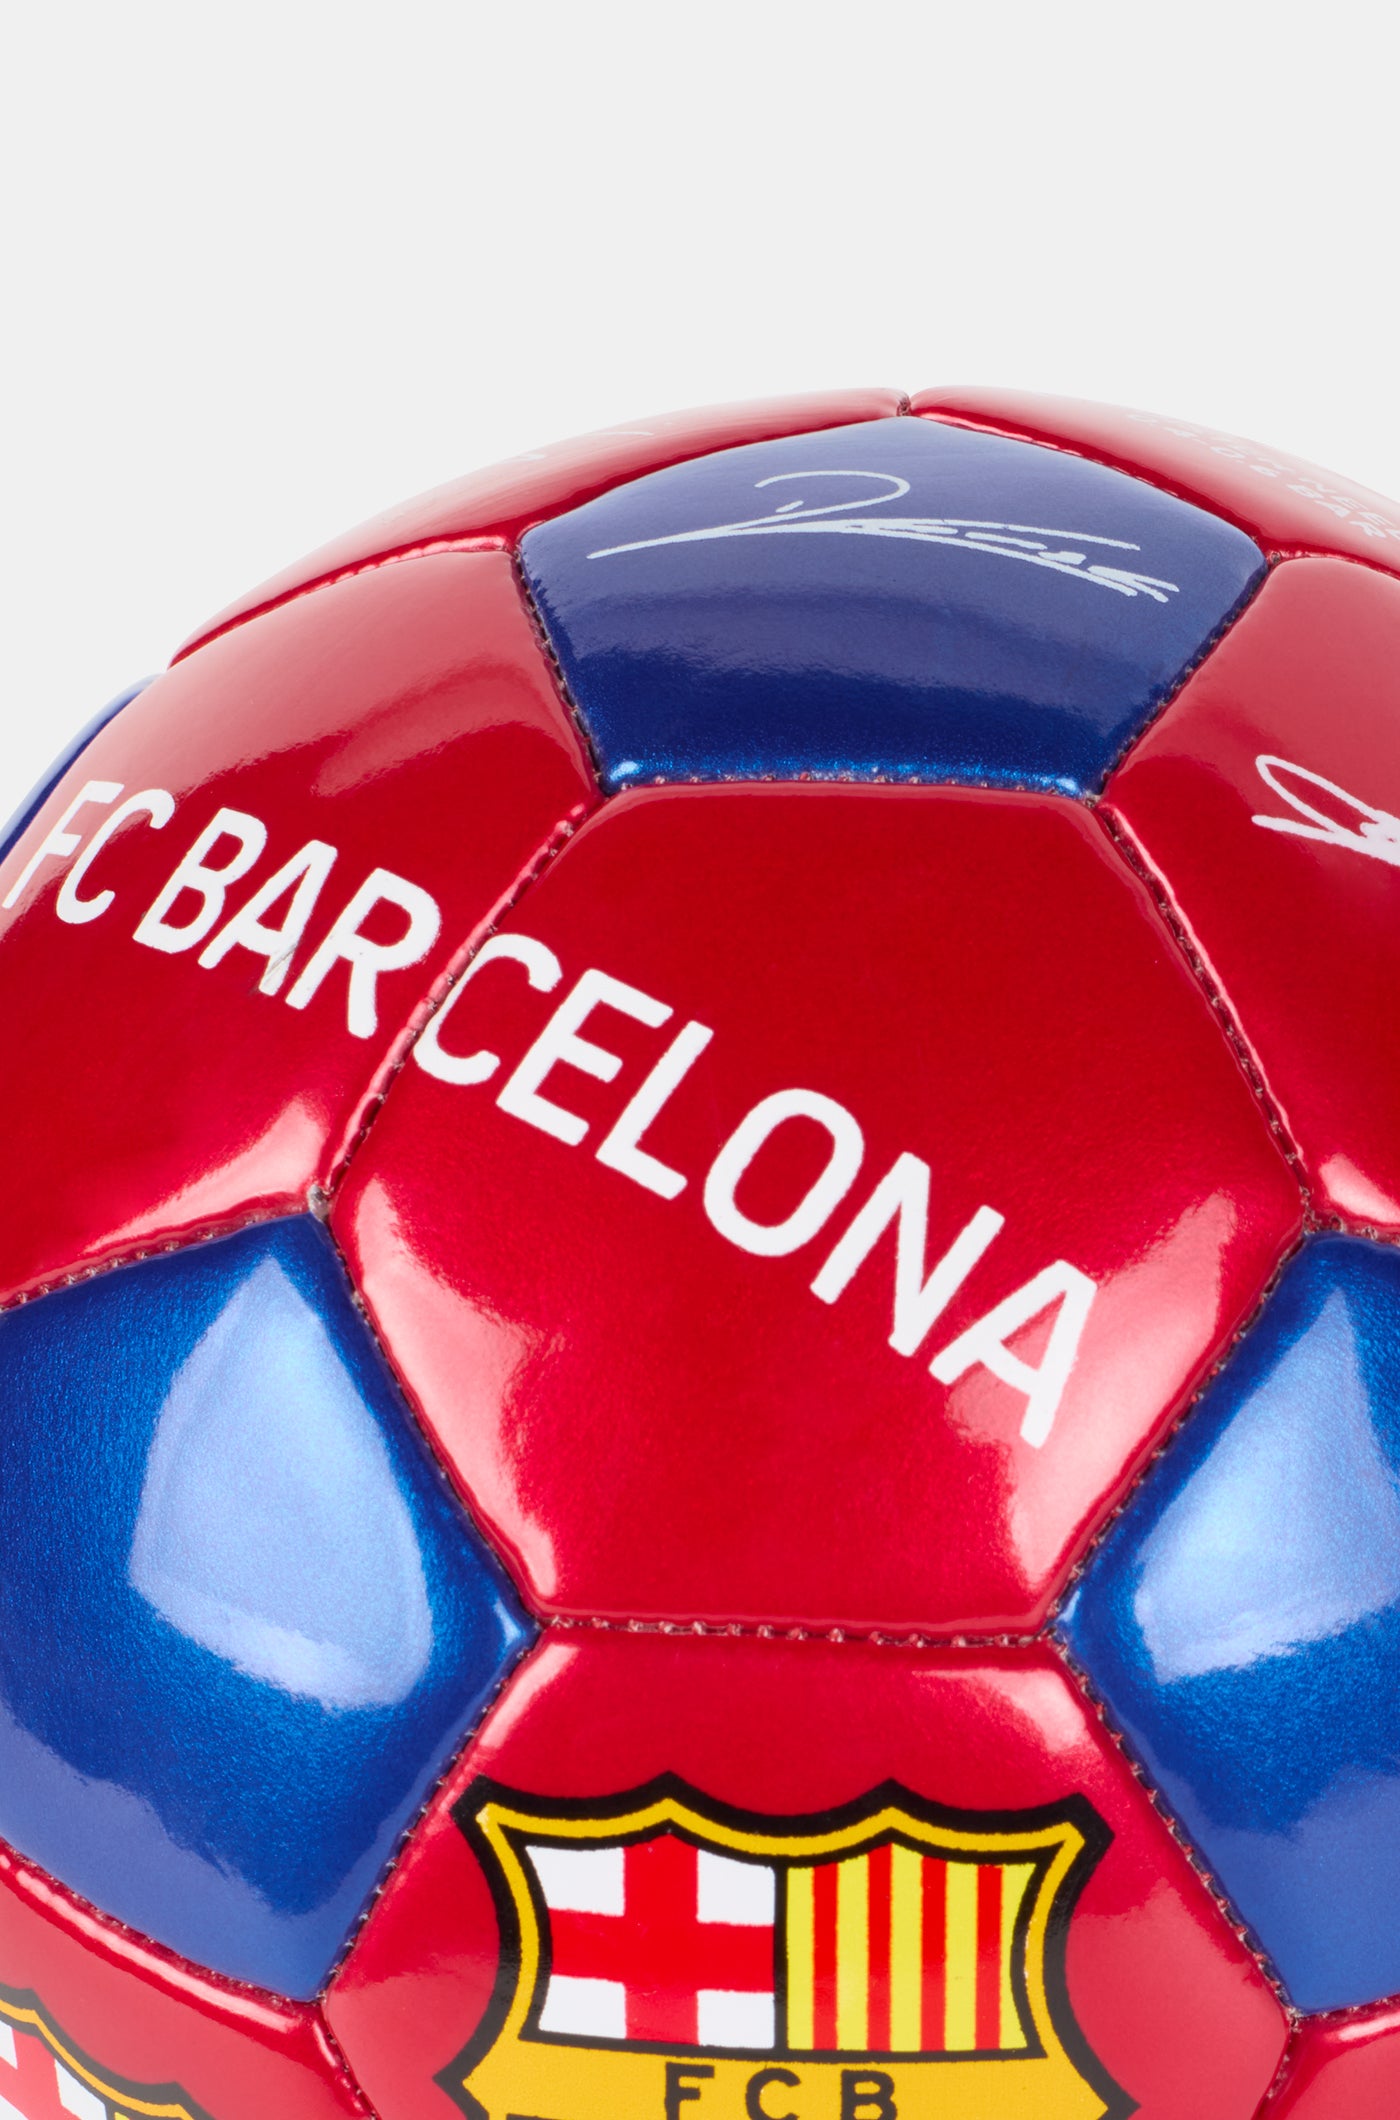 Balón FC Barcelona - Mini